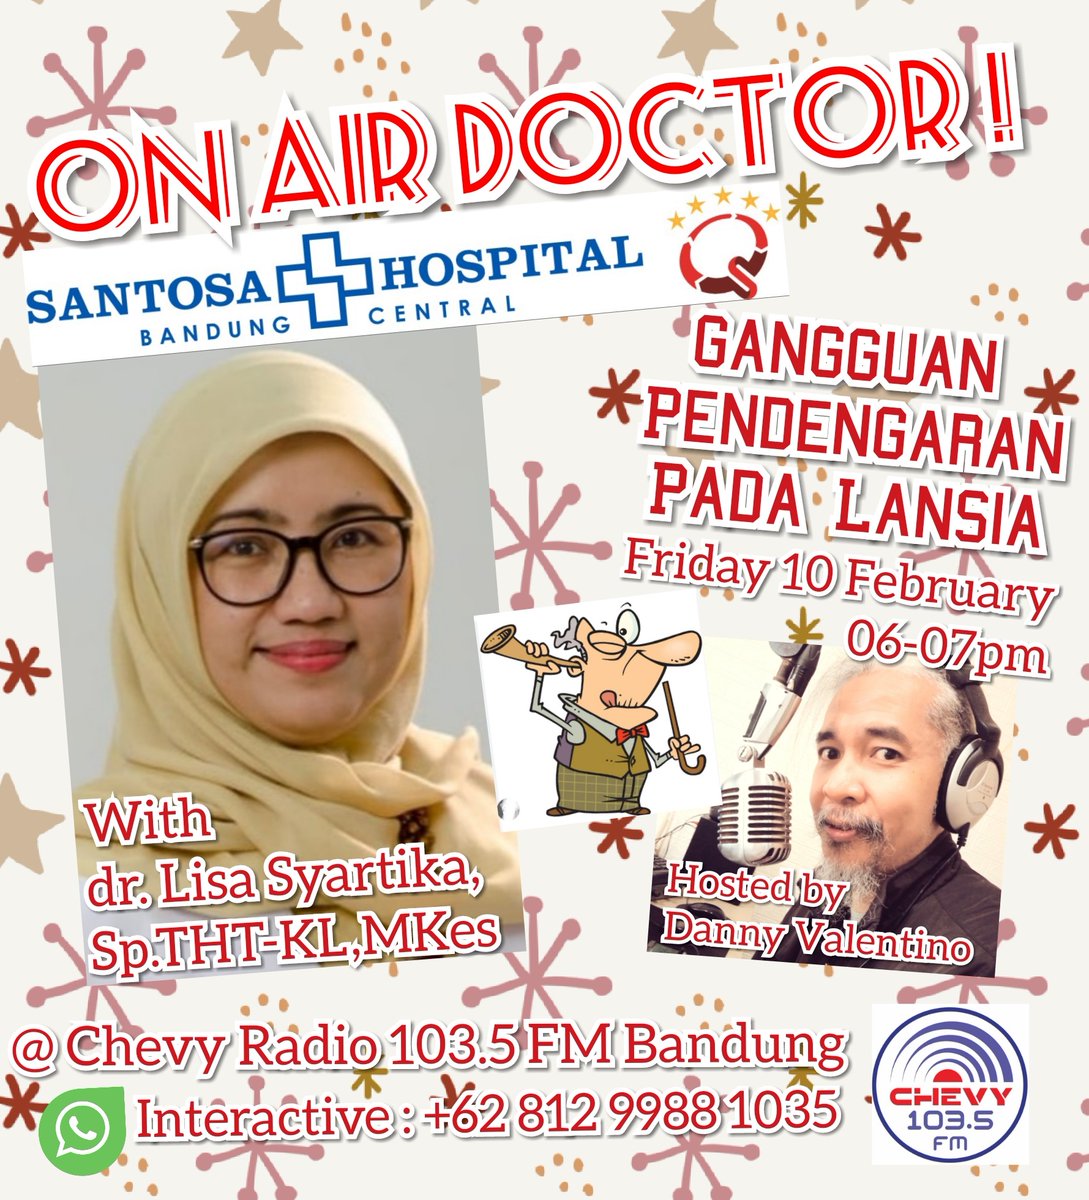 'DOCTOR.. DOCTOR !' Every Friday 06-07pm @ Chevy Radio 103.5 FM #Bandung 📻💊😊
#lansia #gangguanpendengaran #santosahospitalbandung